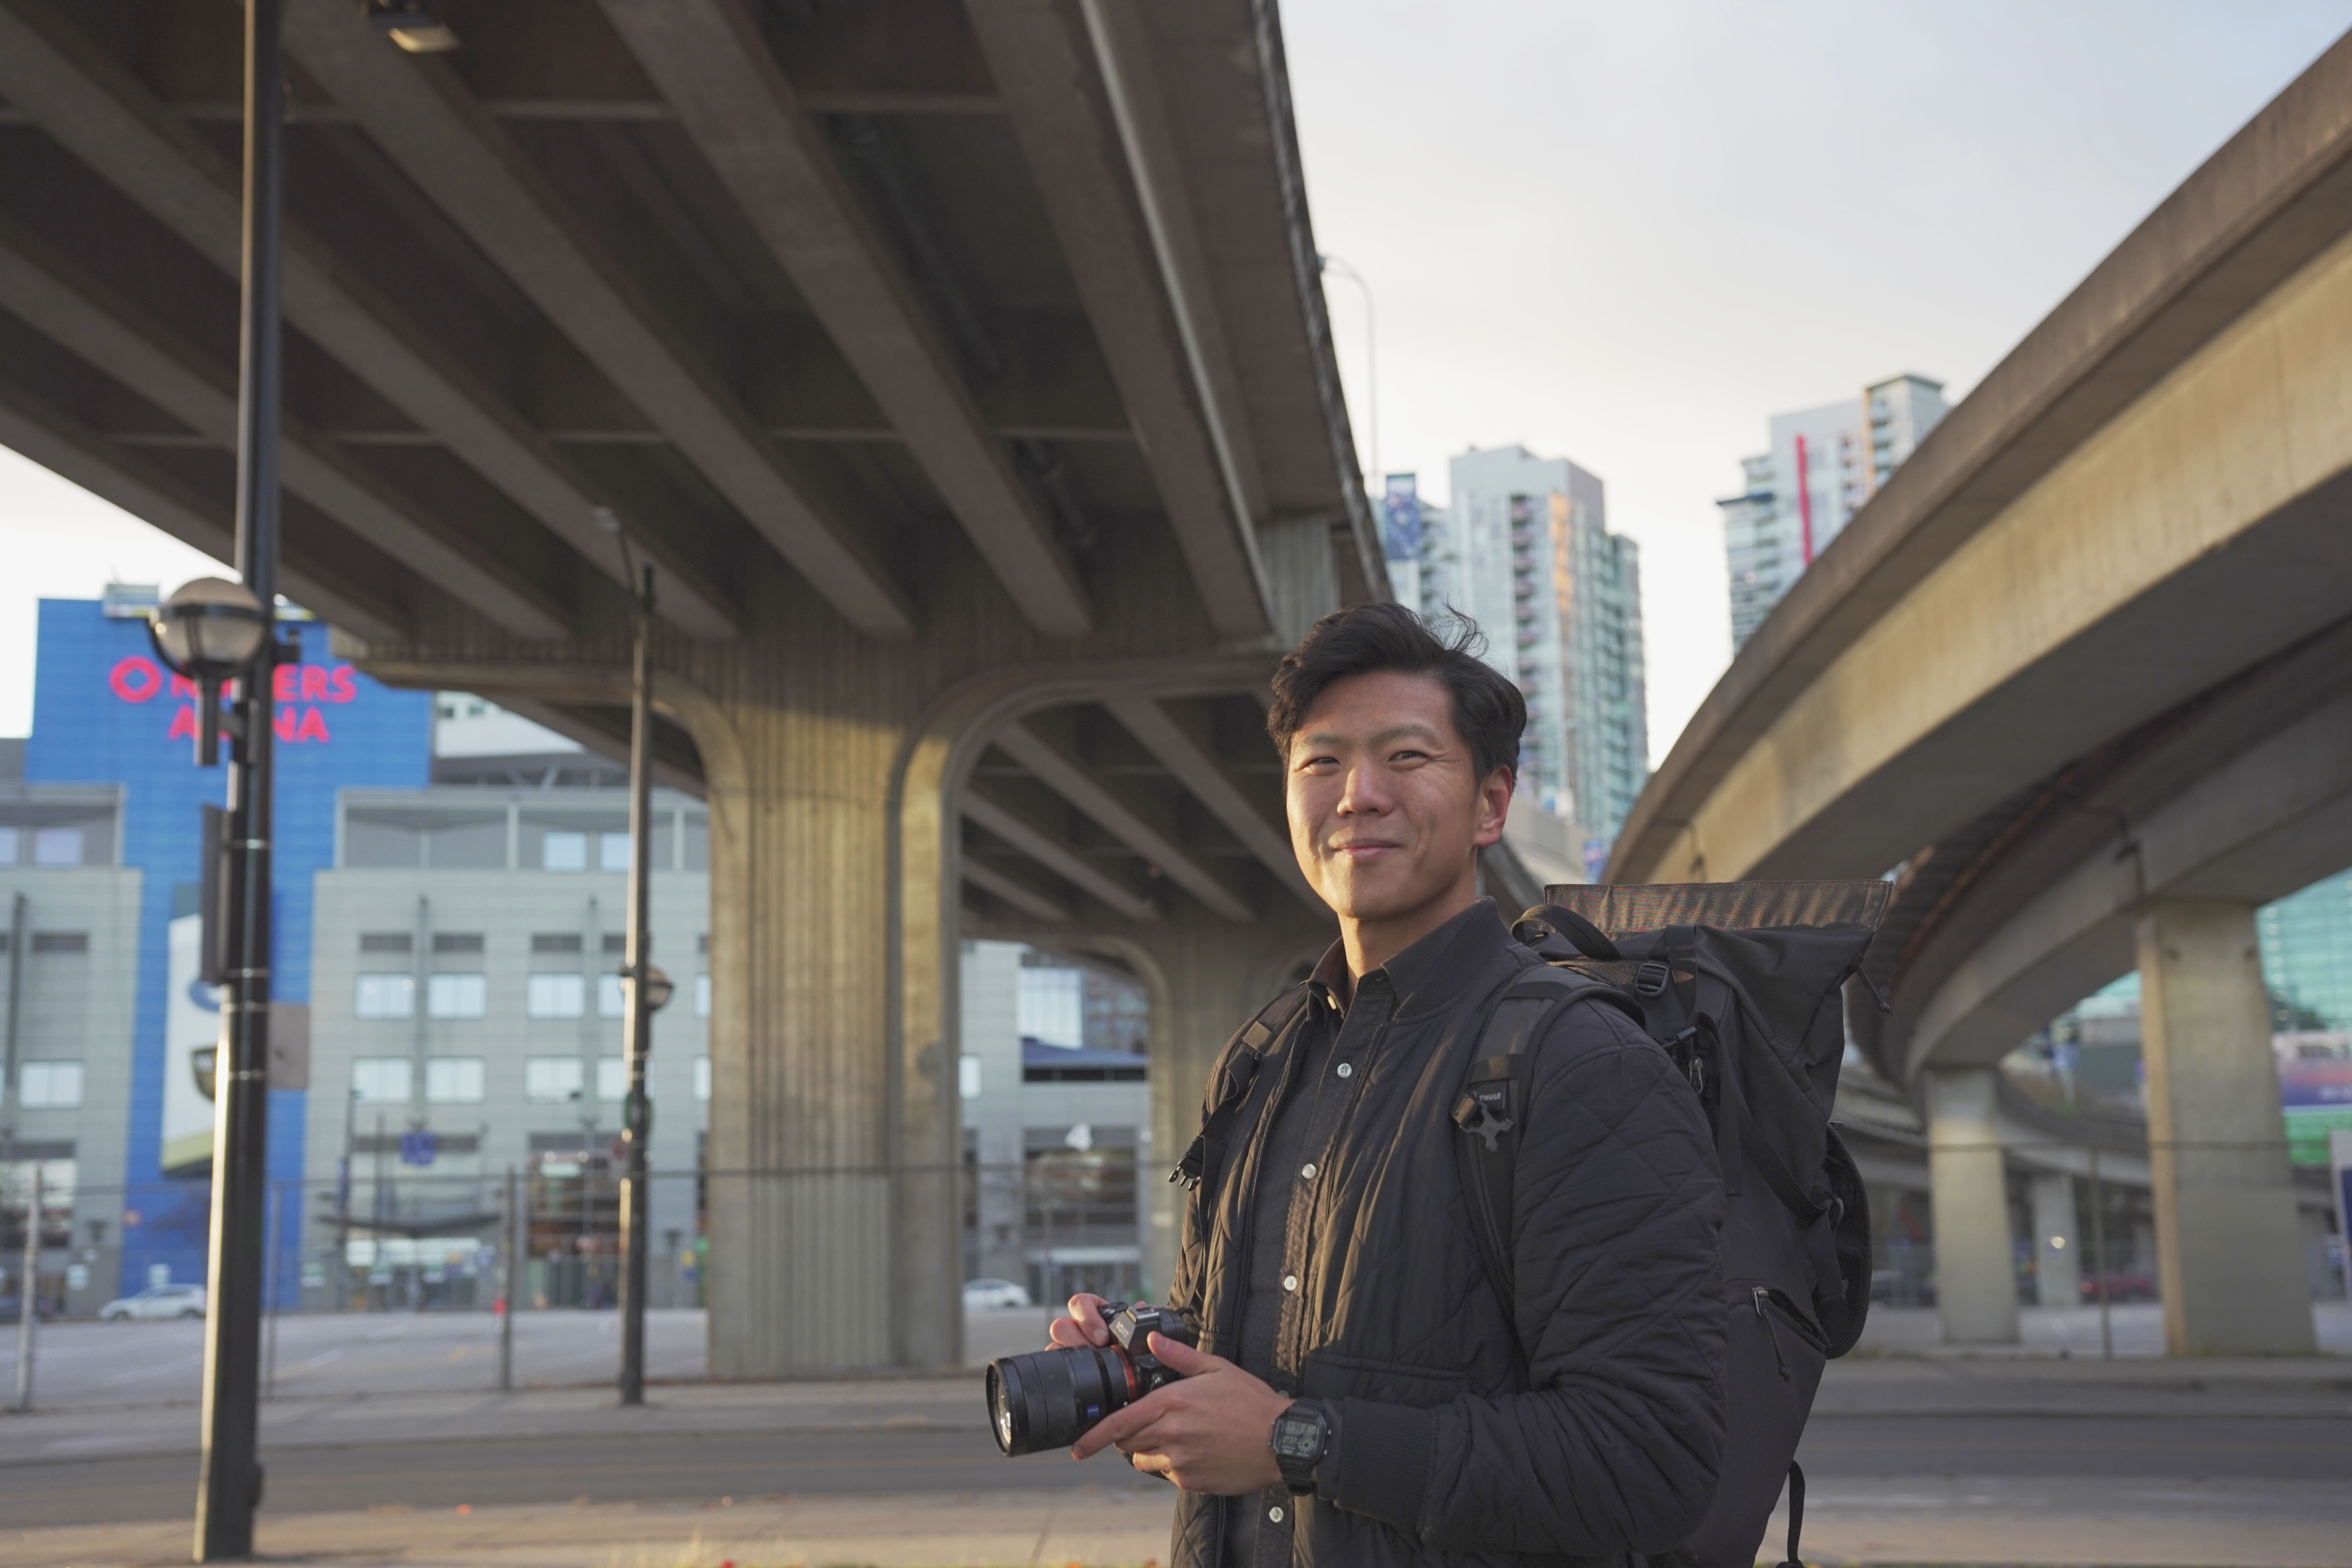 Uytae Lee posing under 2 skytrain tracks holding a camera.